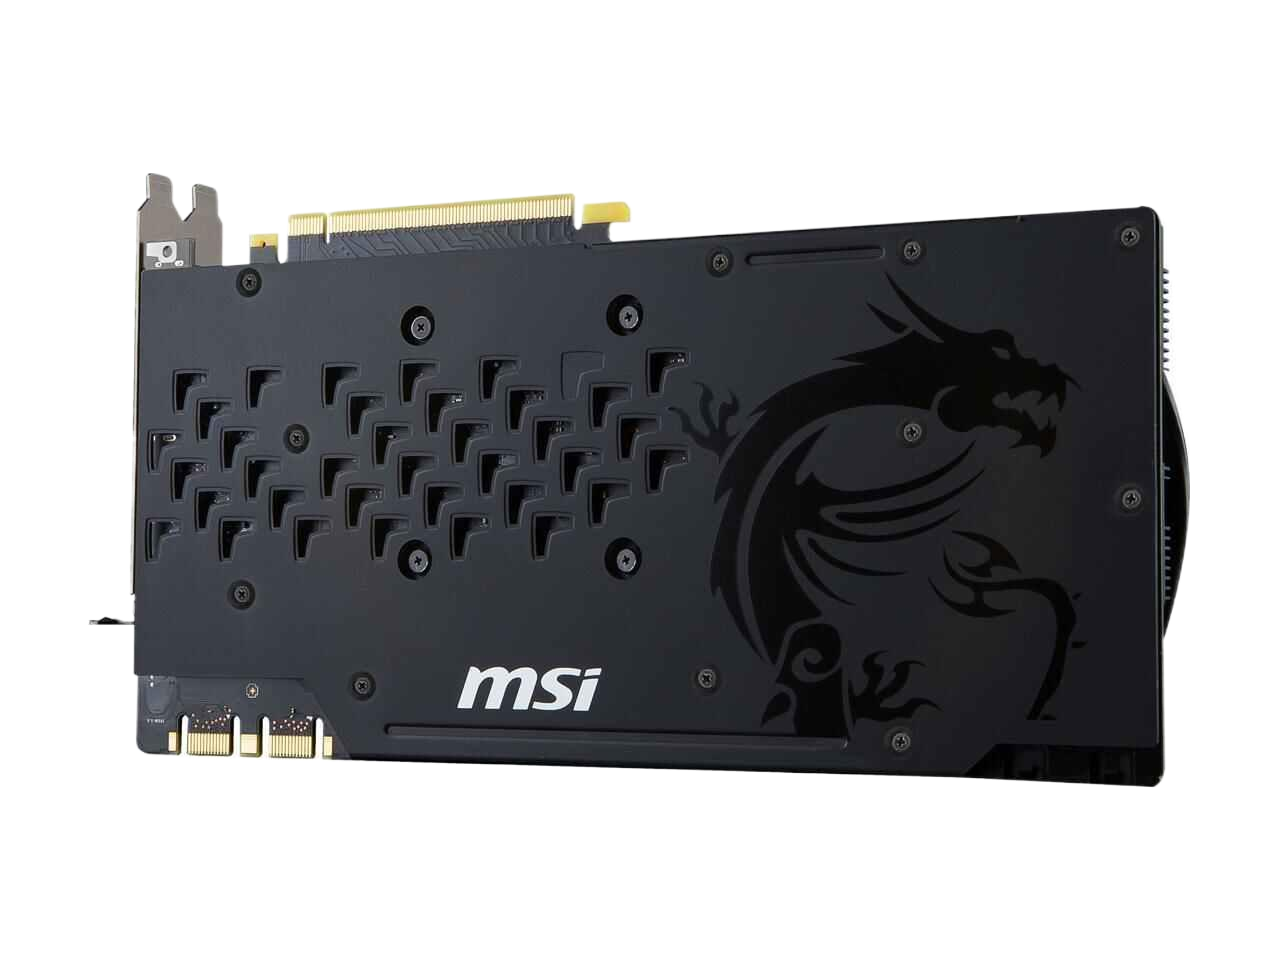 MSI GeForce GTX GeForce 1060 GAMING 6GB 192-Bit GDDR5 DirectX 12 PCI Express 3.0 x16 HDCP Ready ATX Video Card